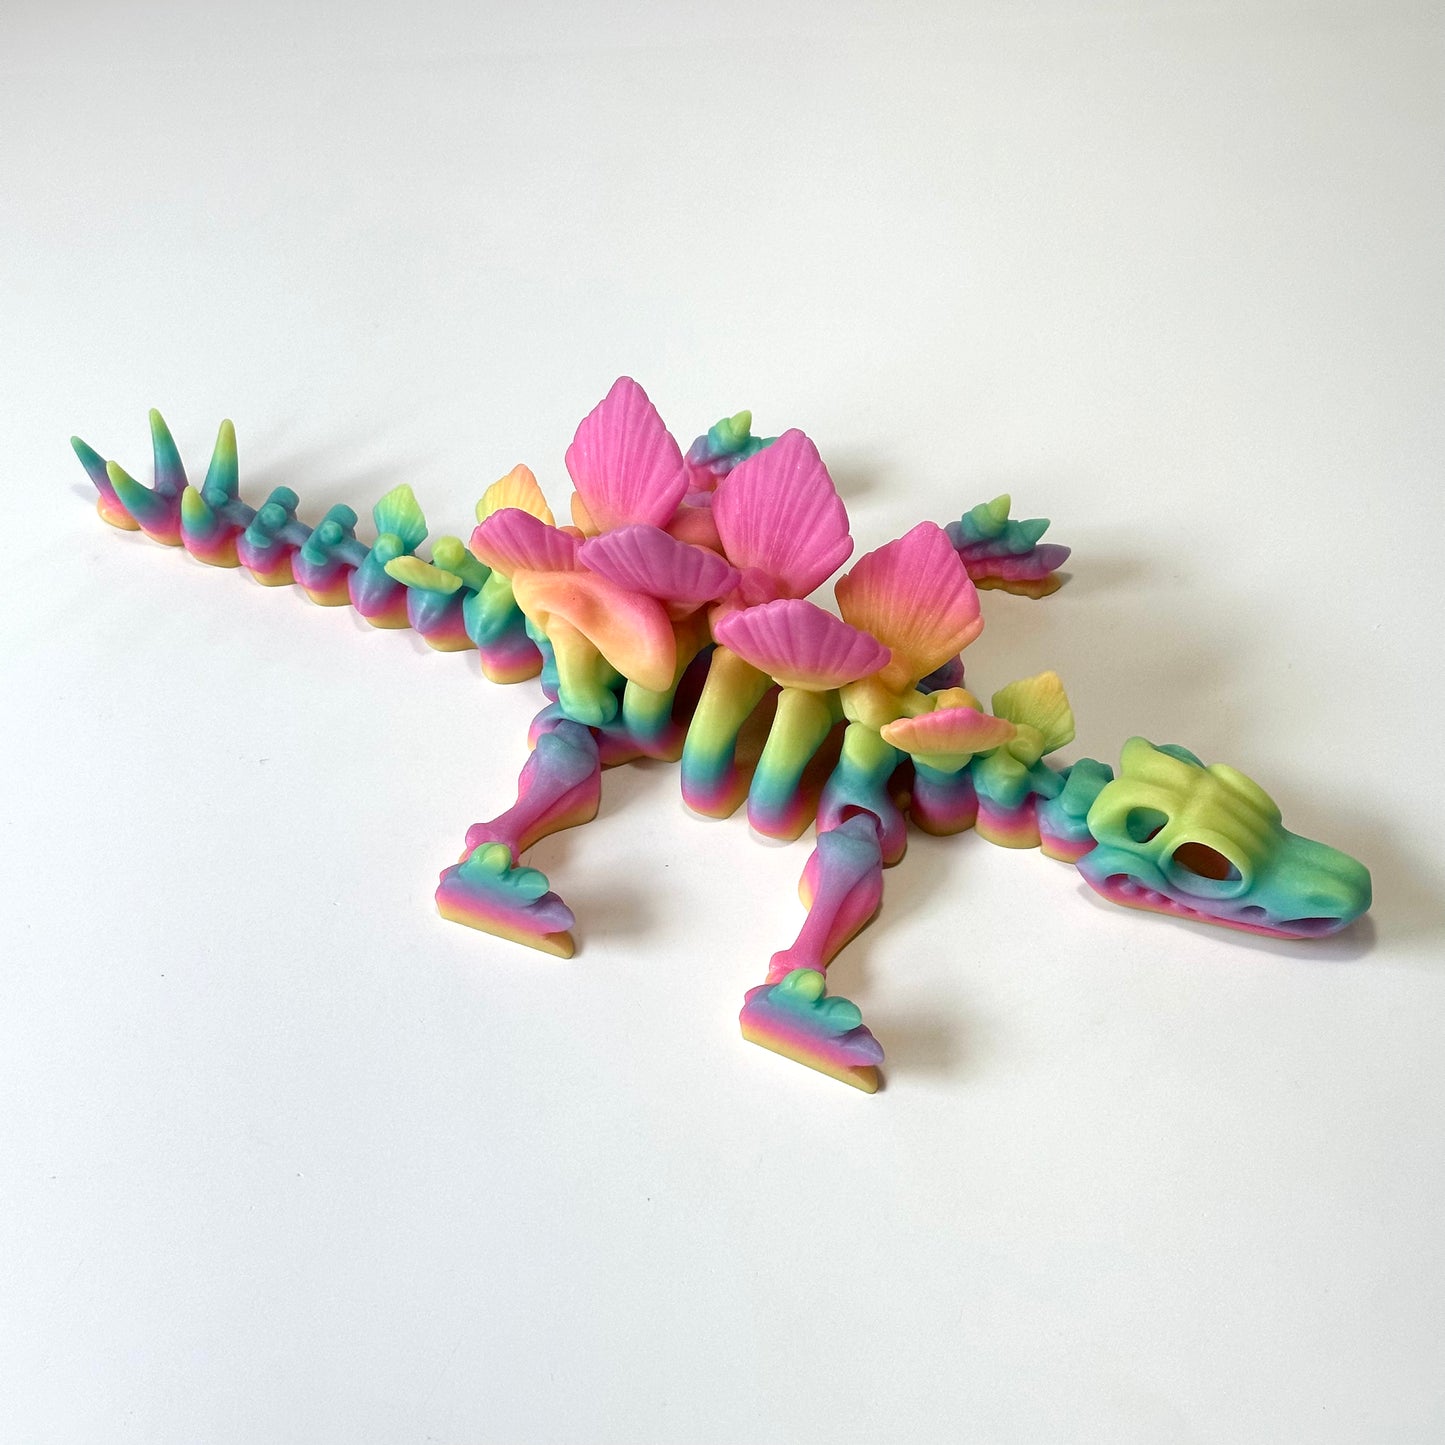 Giant Flexi Skeleton Stegosaurus - 3D Printed Articulating Figure